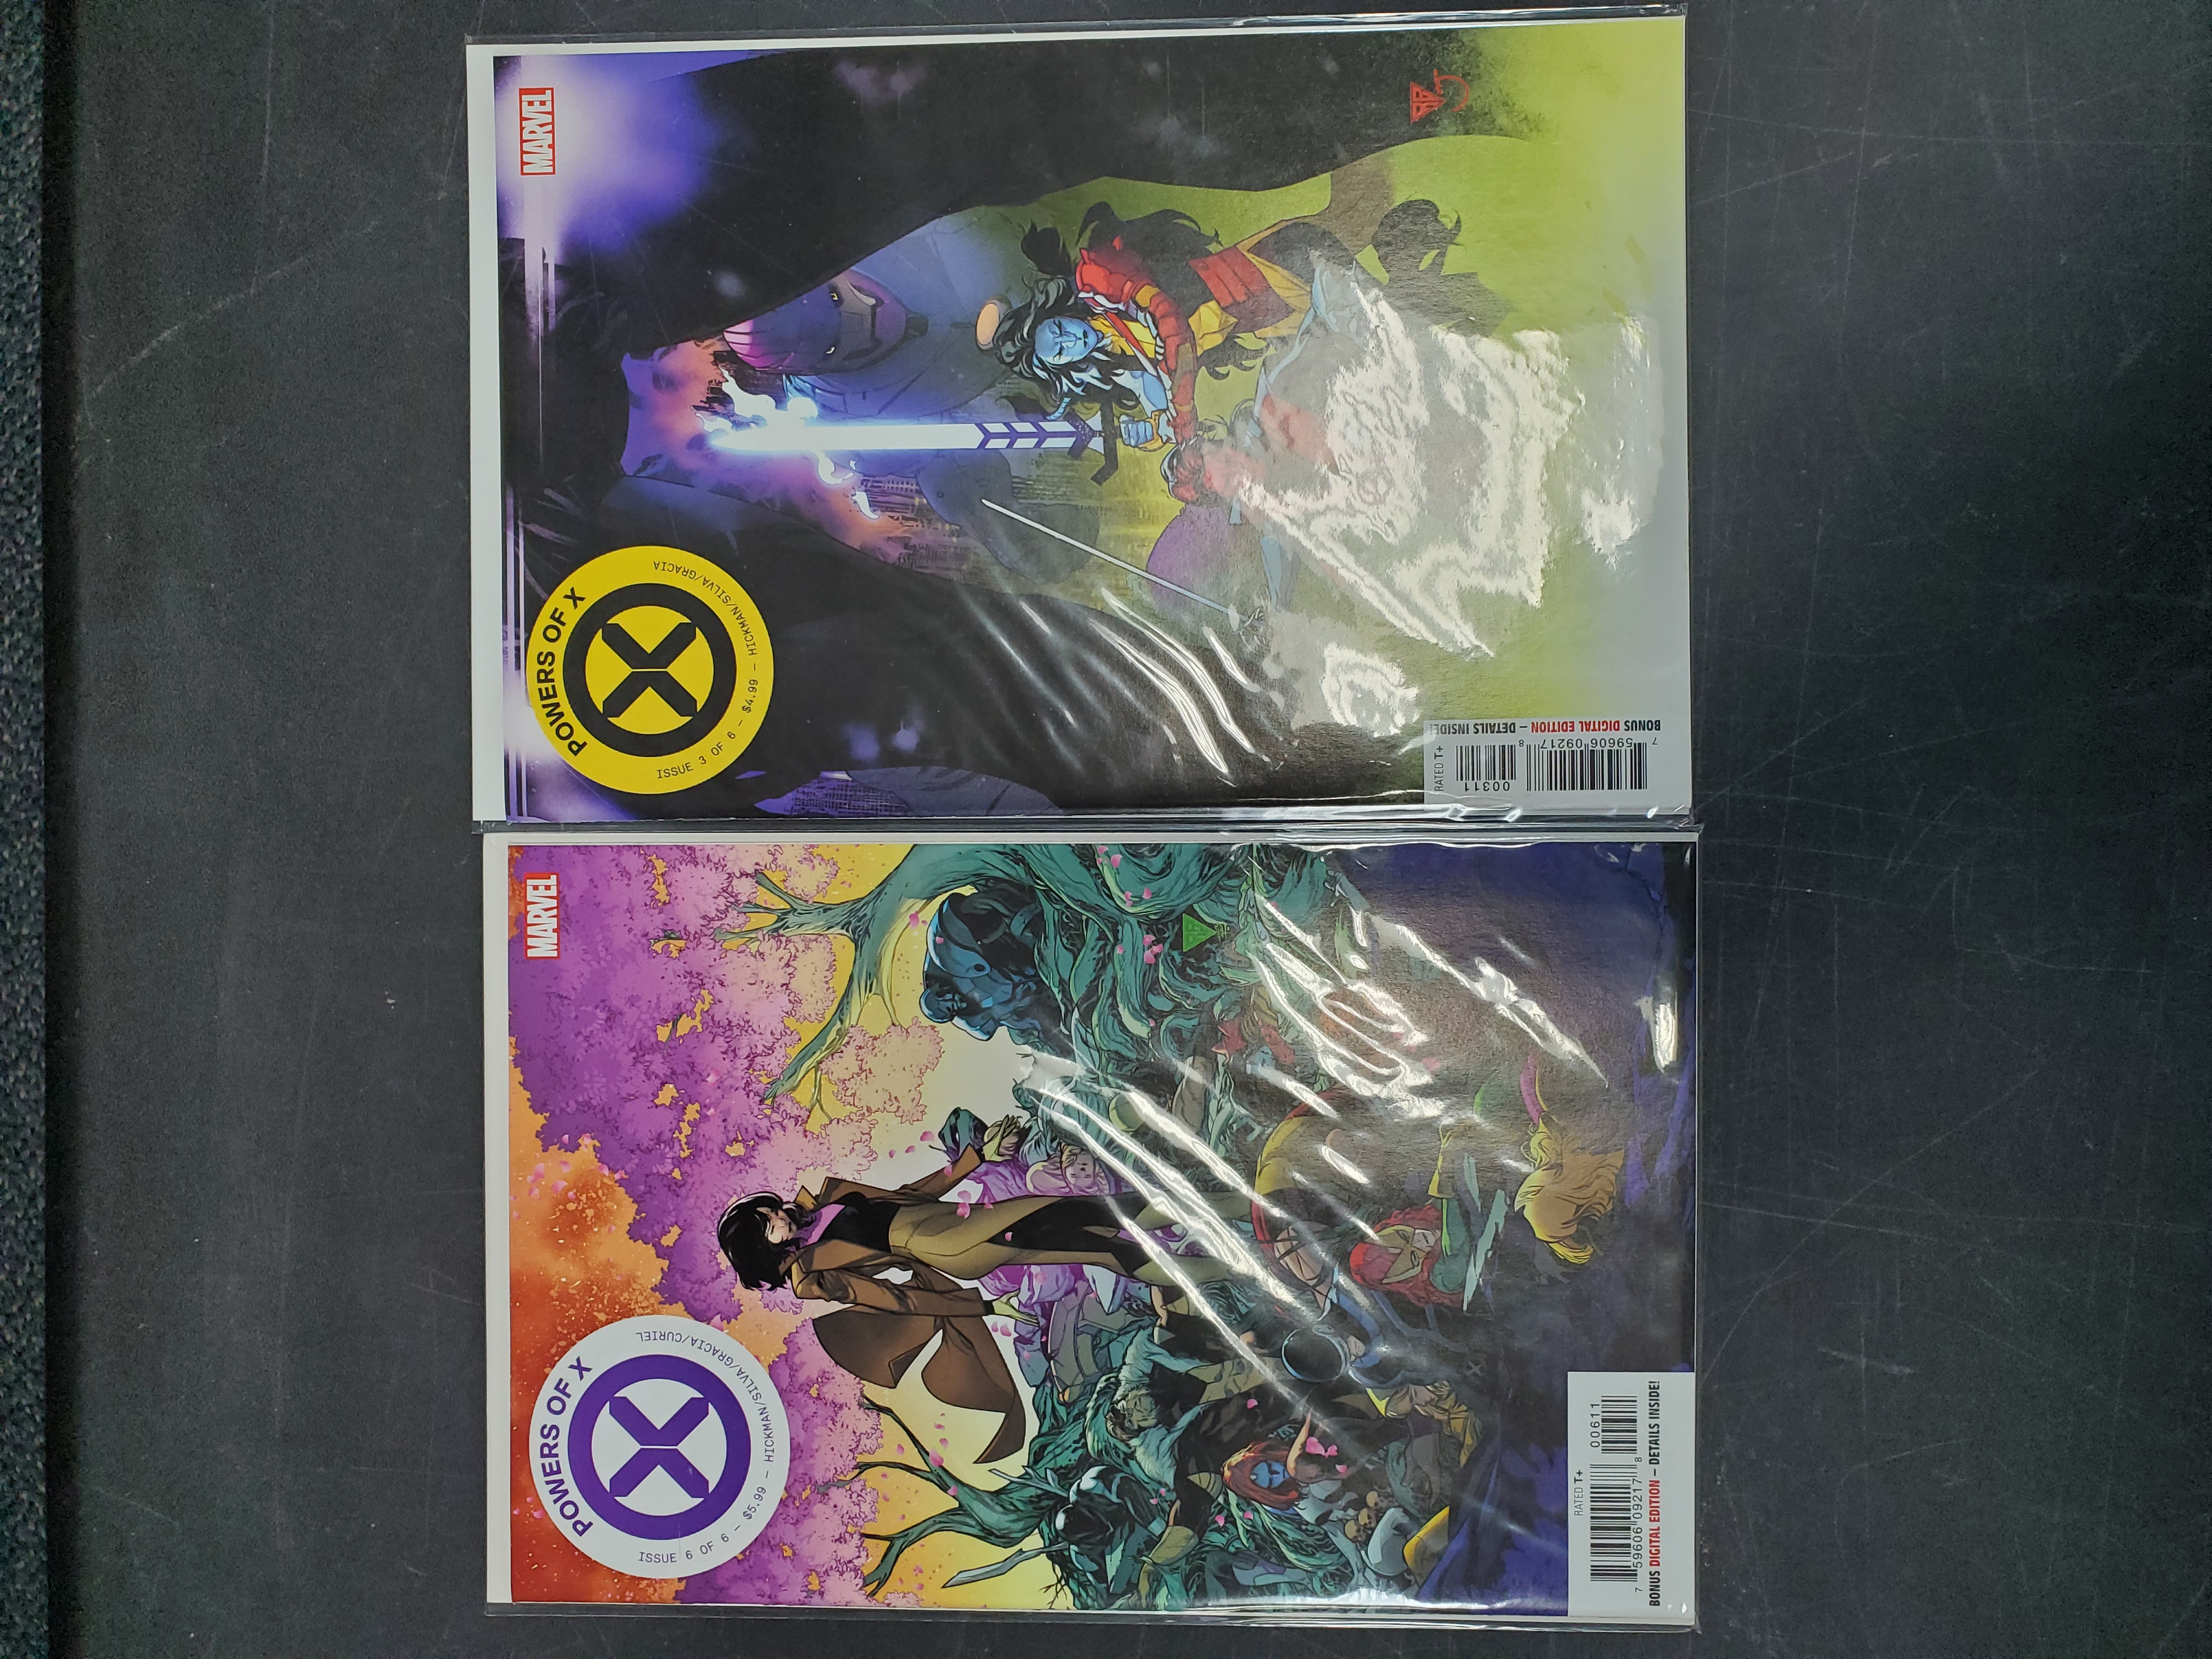 Powers of X #1-6 (Marvel 2019) Set